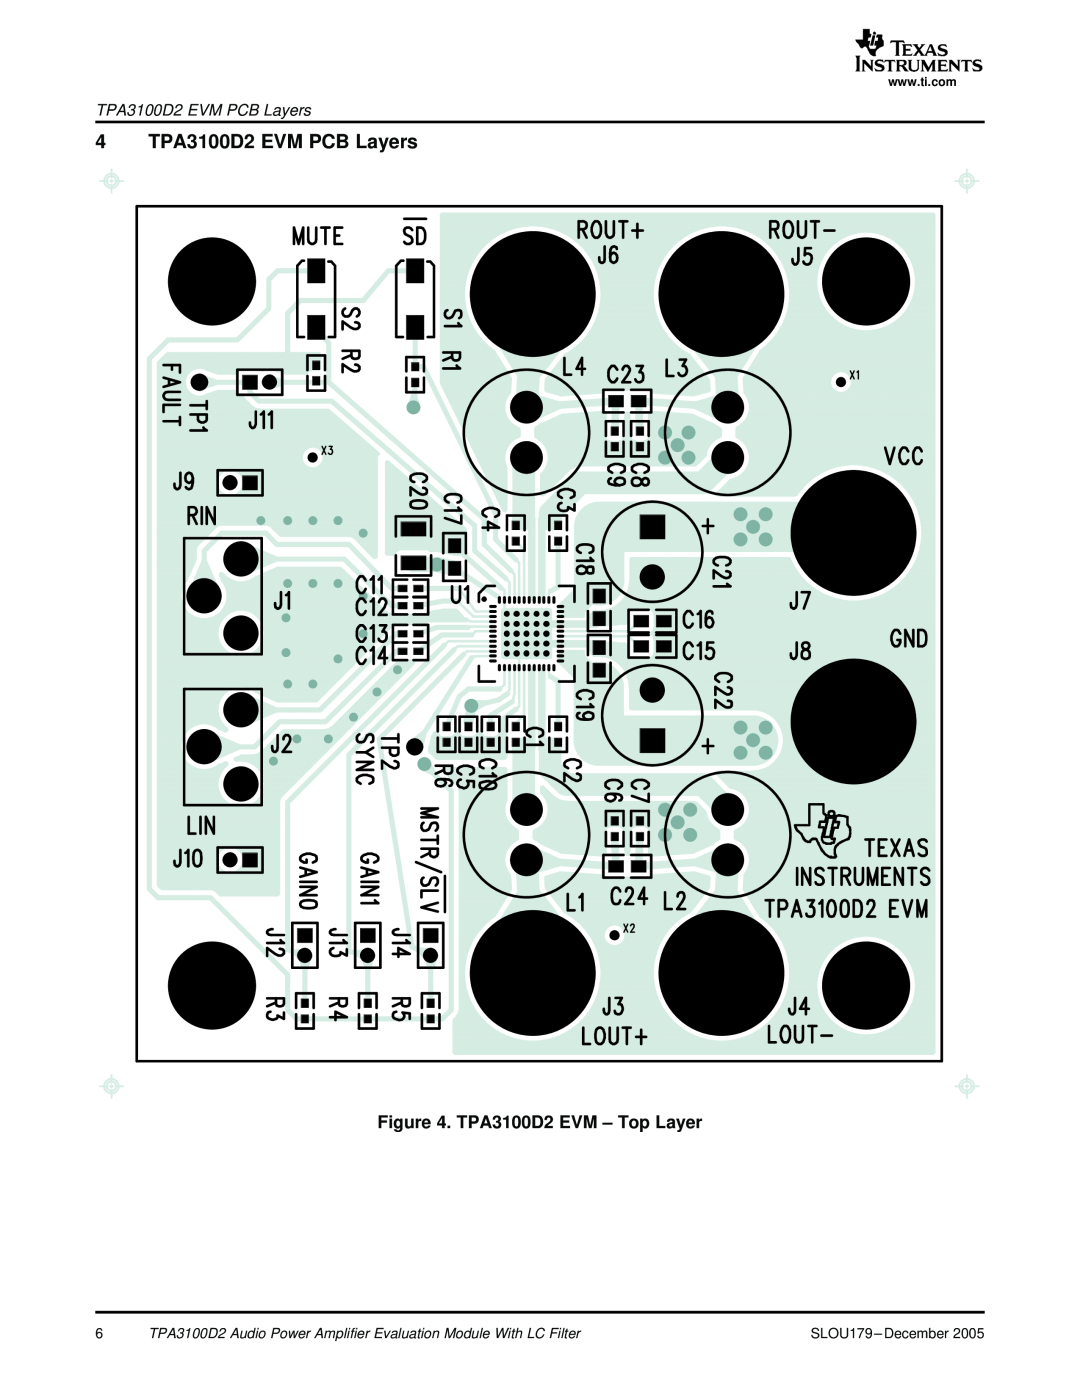 Texas Instruments manual 4 TPA3100D2 EVM PCB Layers, TPA3100D2 EVM - Top Layer 